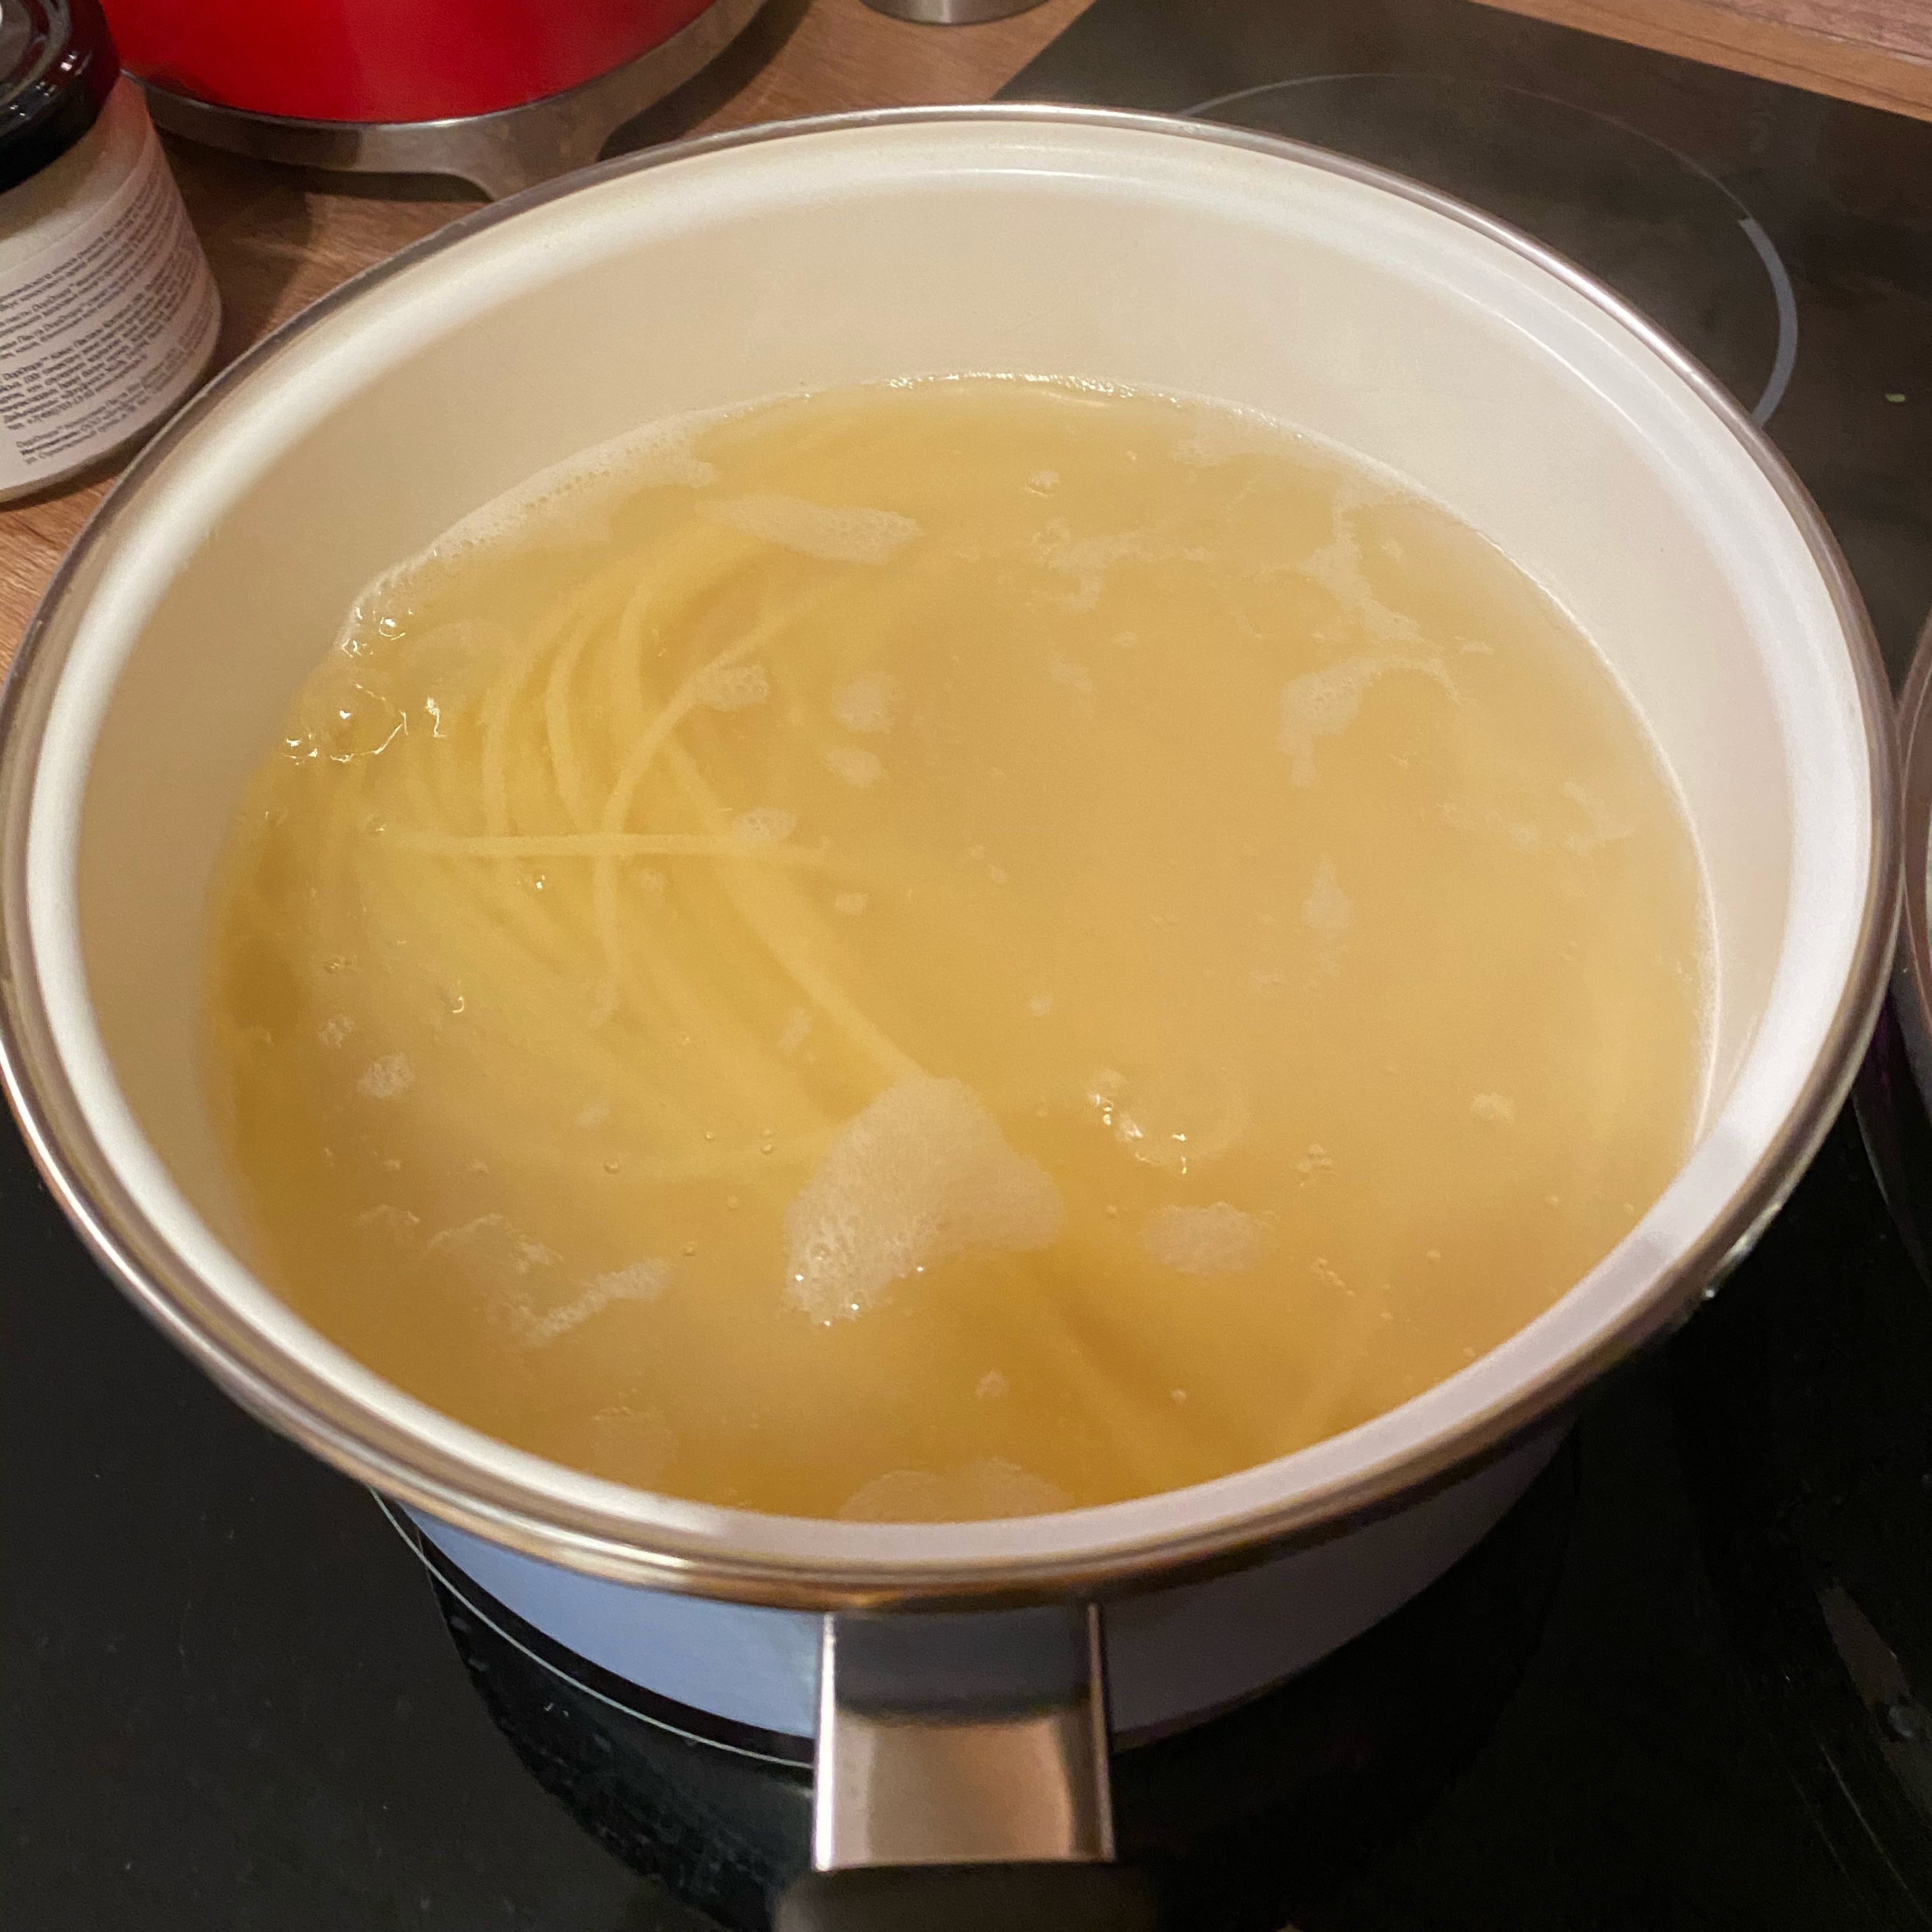 Boil spaghetti 11 minutes